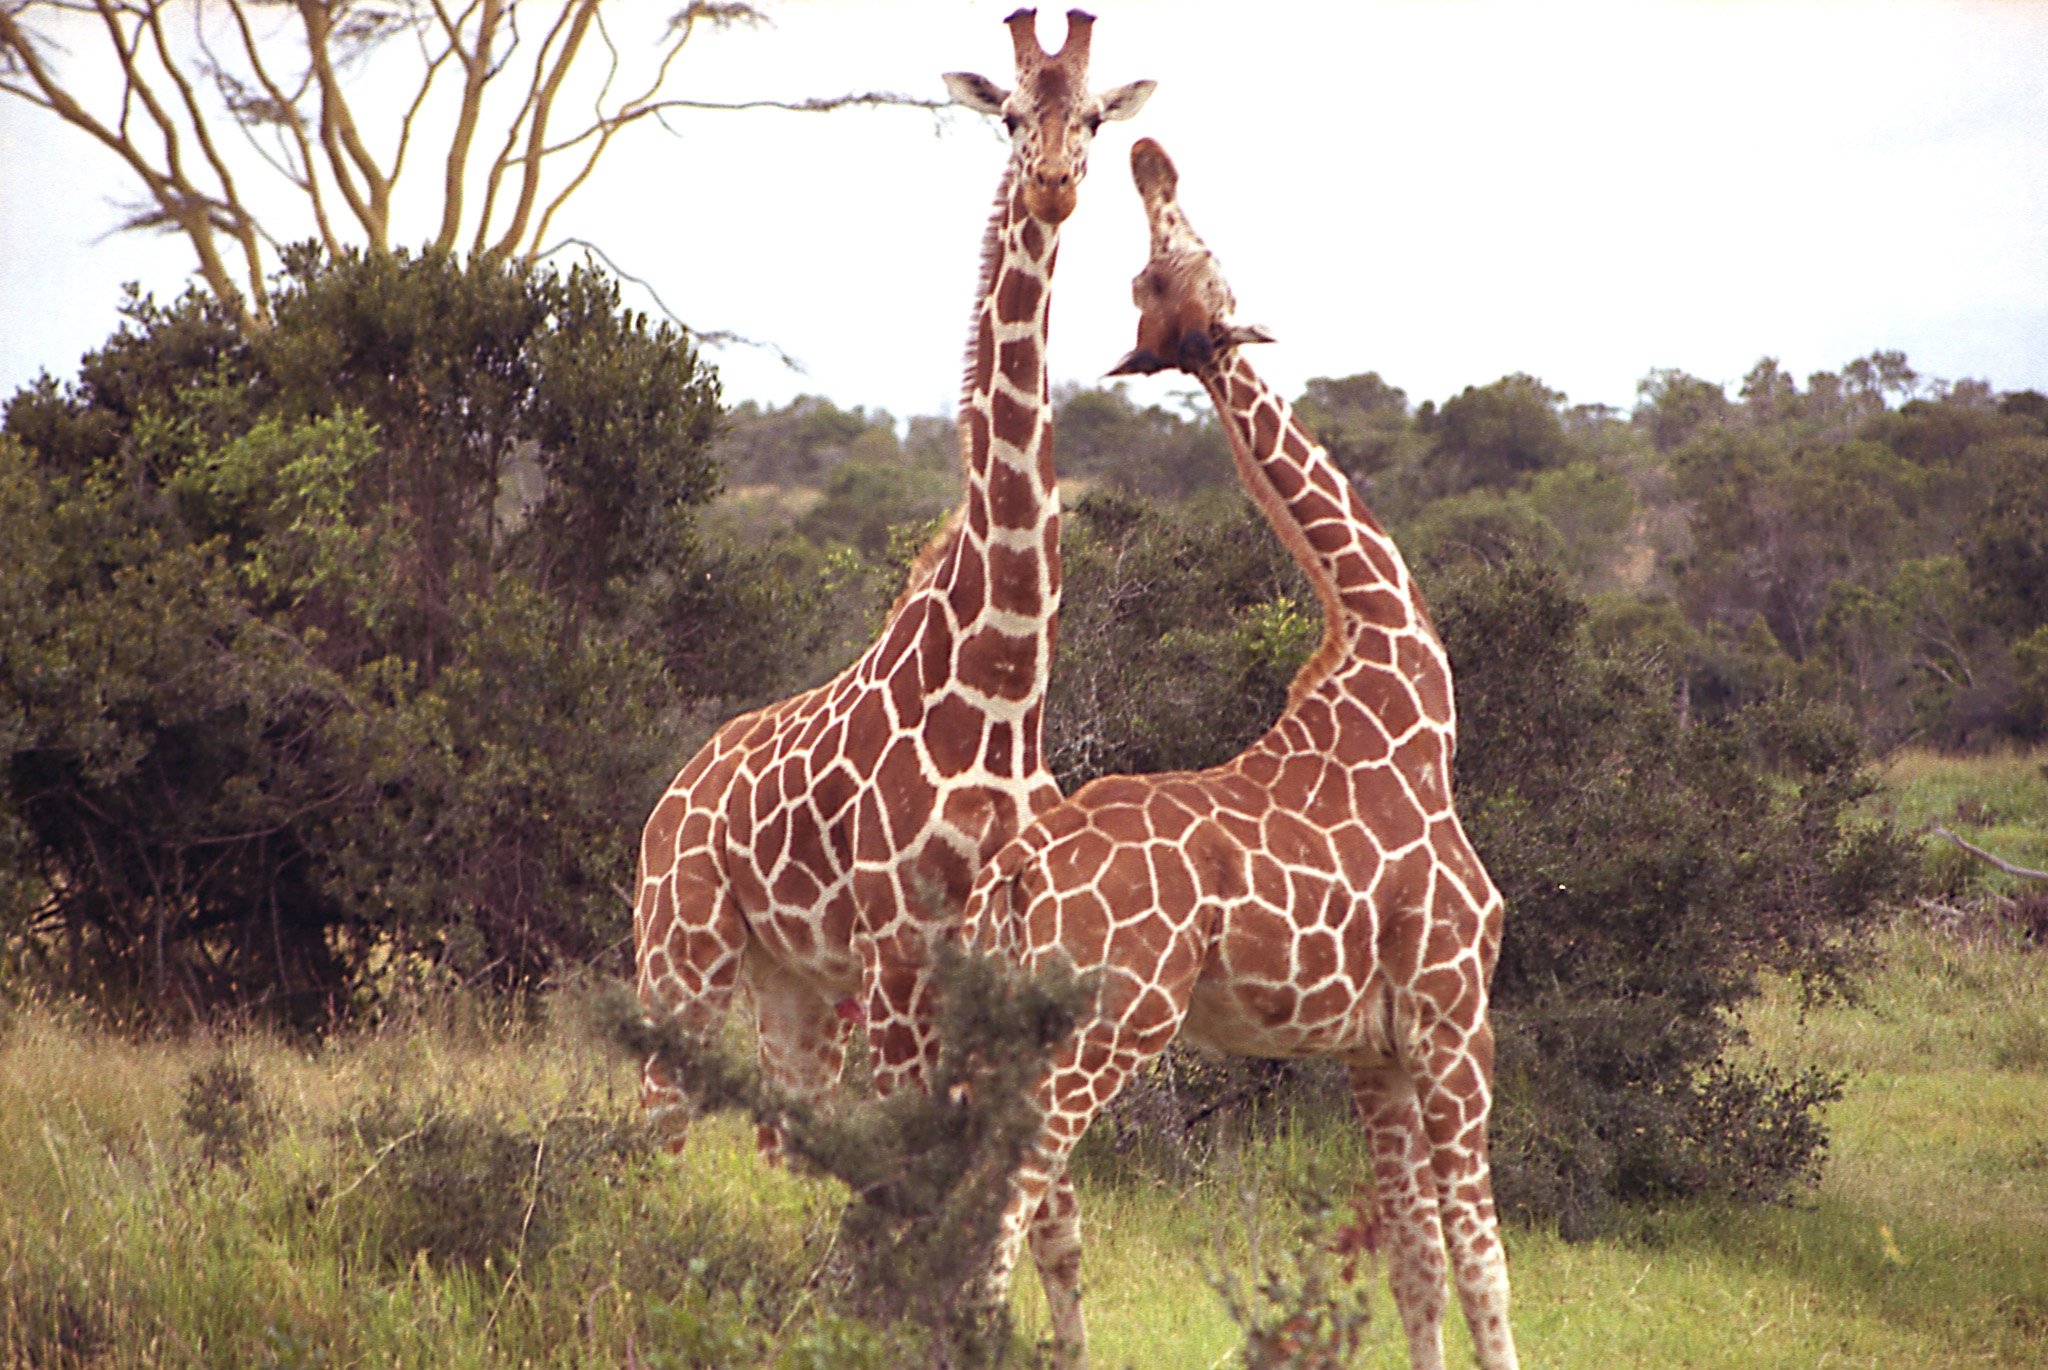 член у жирафа длина фото 72